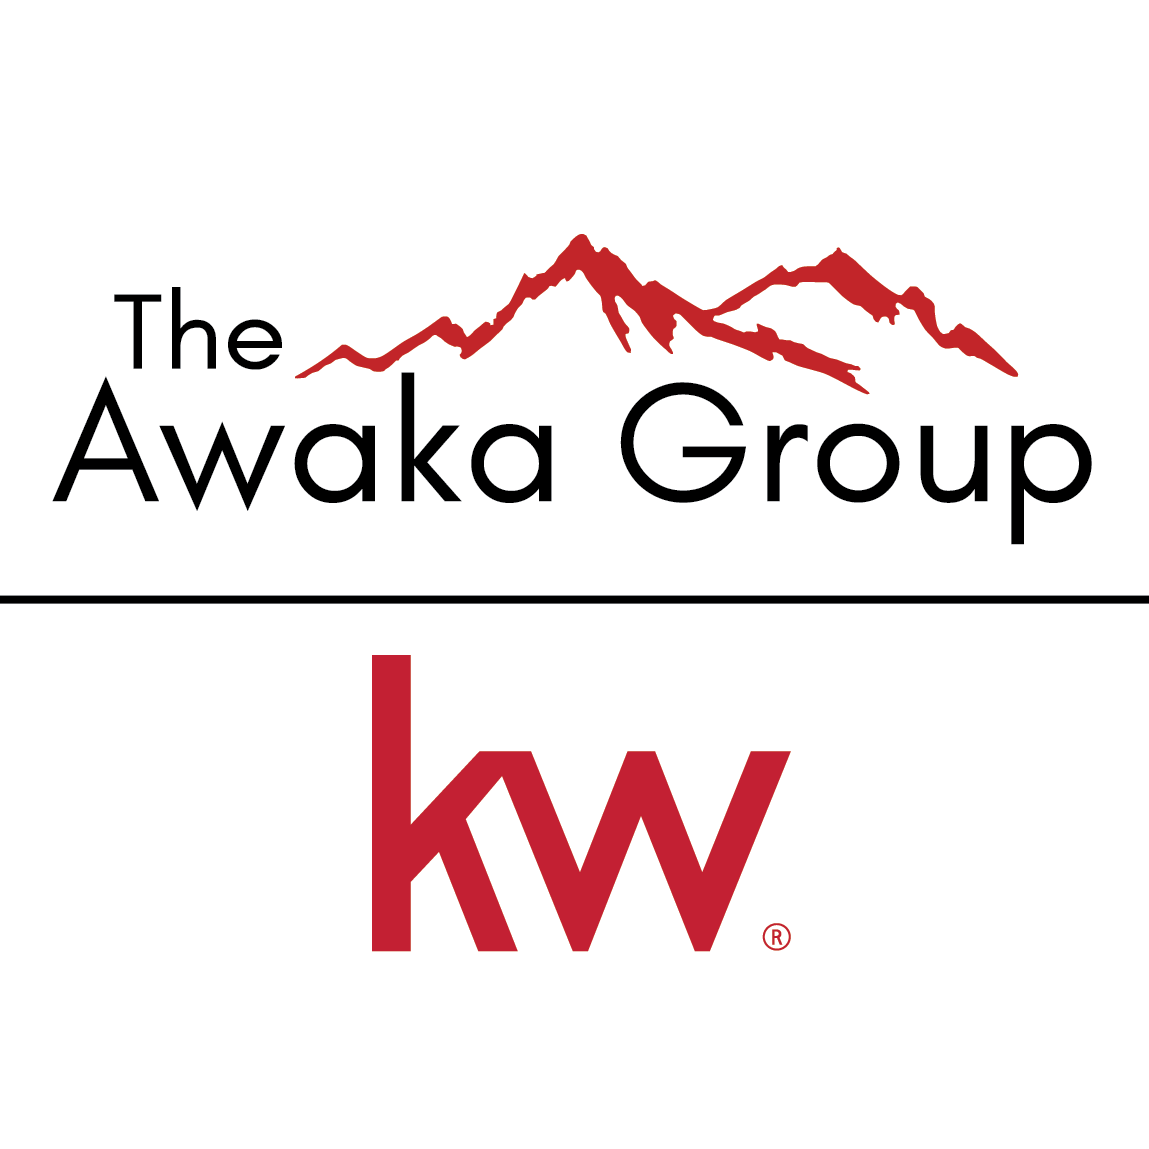 The Awaka Group